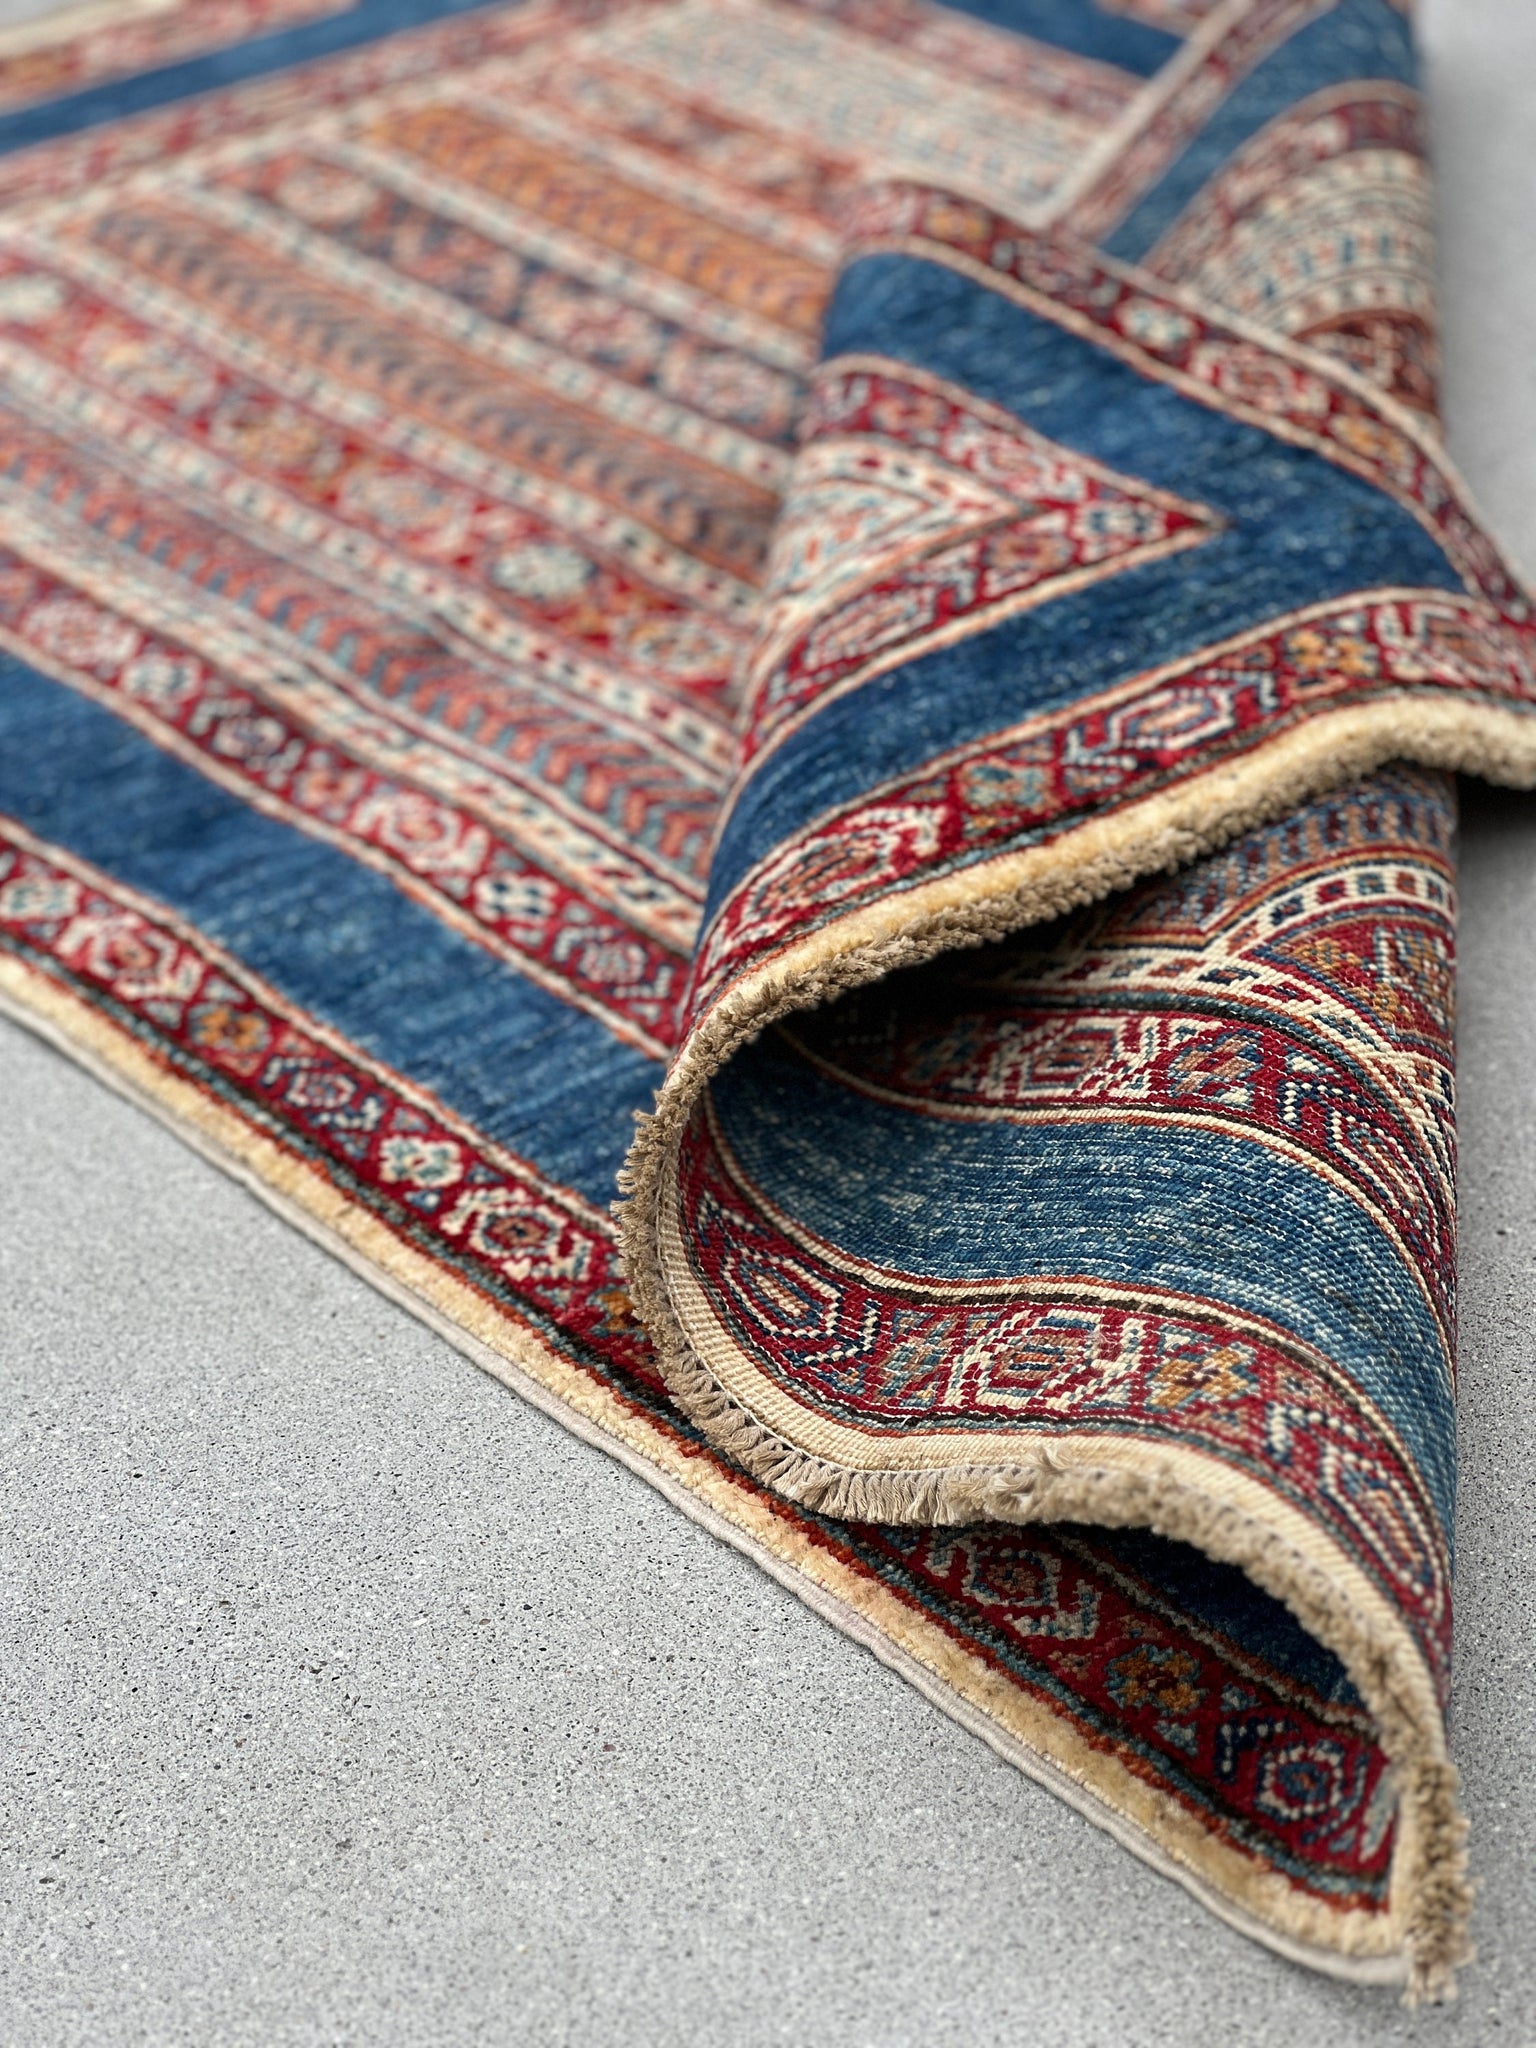 3x5 (100x180) Handmade Afghan Rug | Brick Garnet Red Denim Blue Chocolate Brown Ivory Beige Orange| Hand Knotted Persian Turkish Wool Tribal